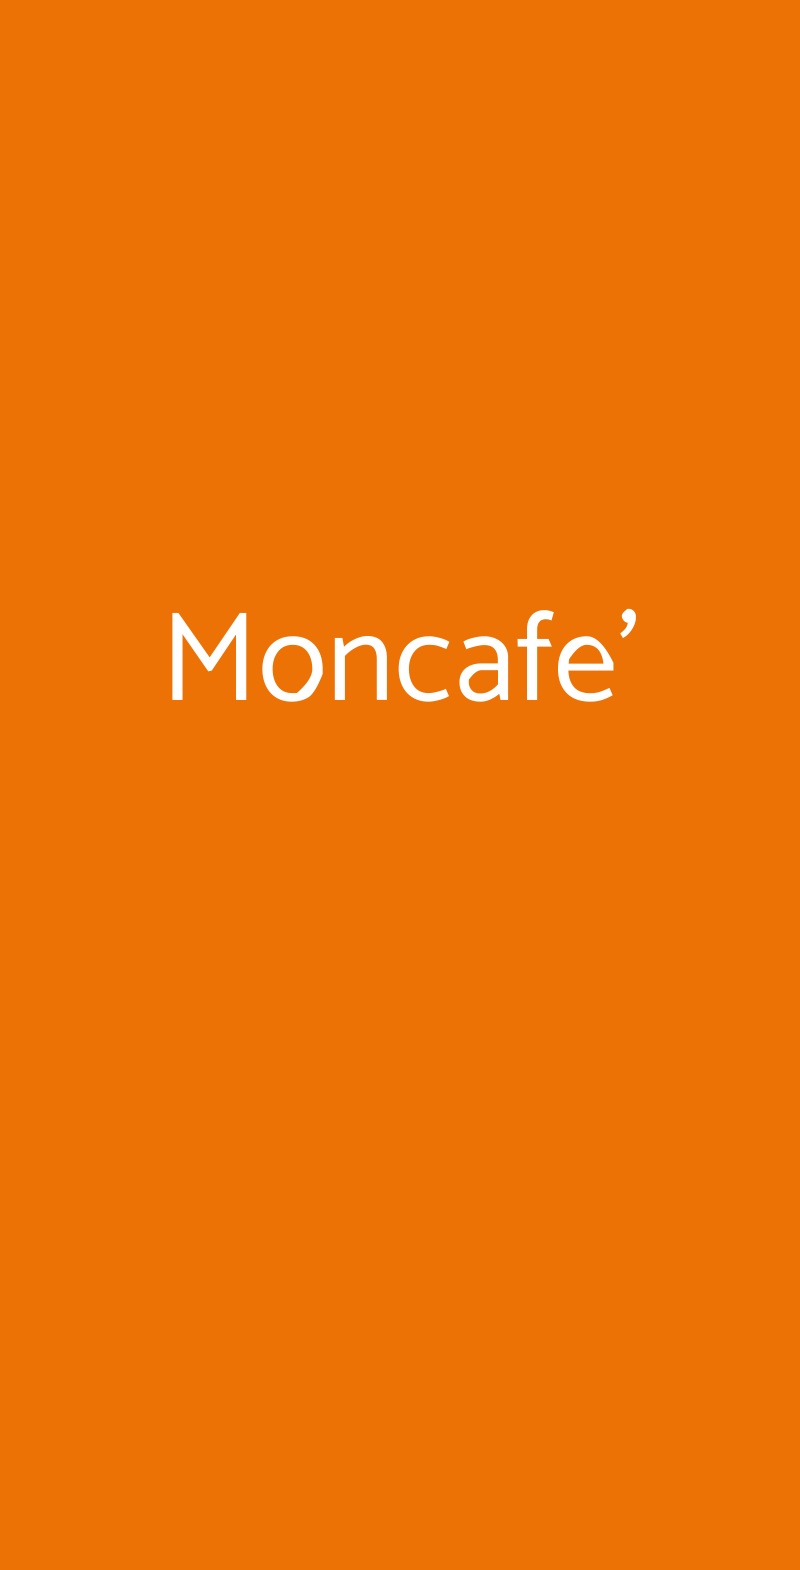 Moncafe' Siracusa menù 1 pagina